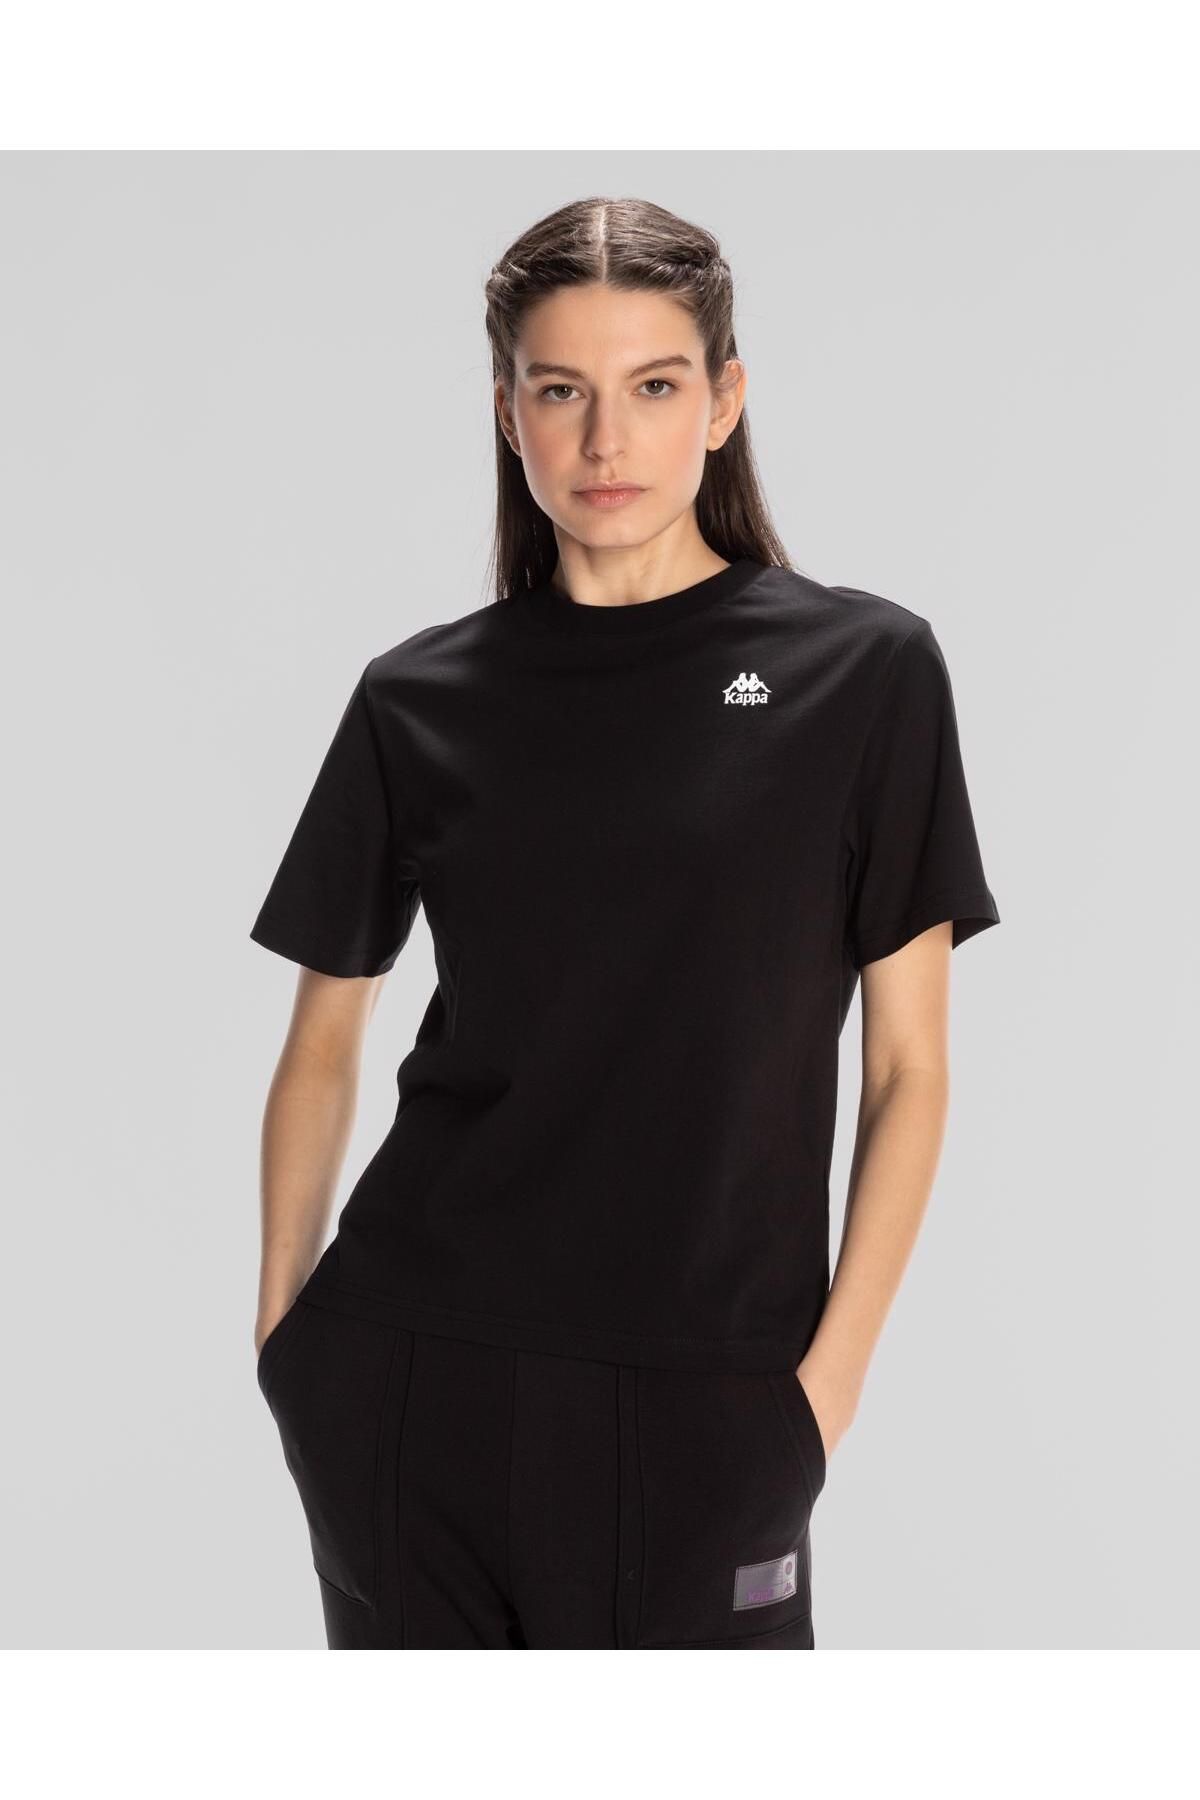 Kappa Authentic Shoshanna T-shirt Kadın Siyah Regular Fit Tişört